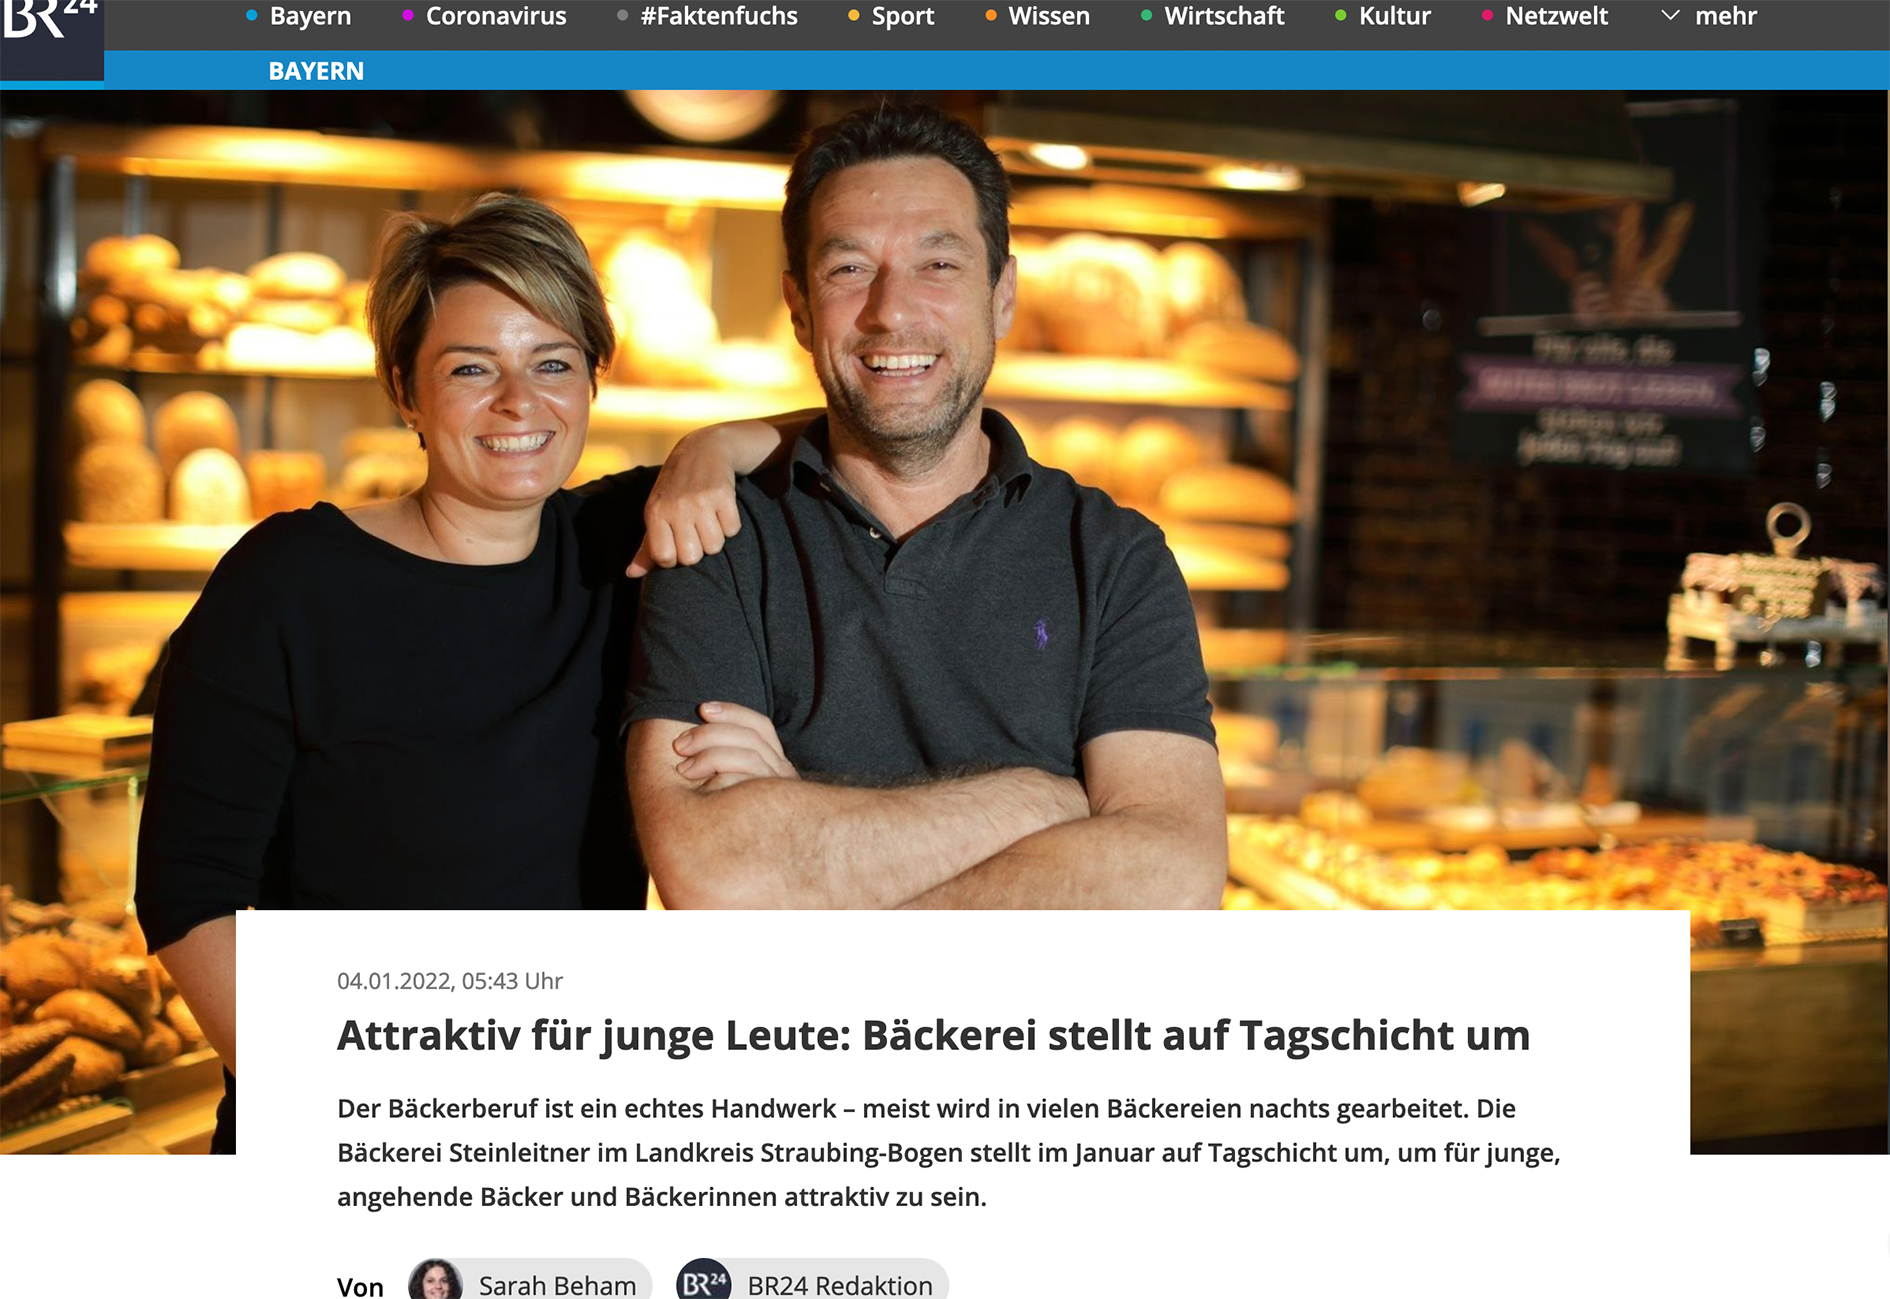 Bäckerei Steinleitner backt tagsüber